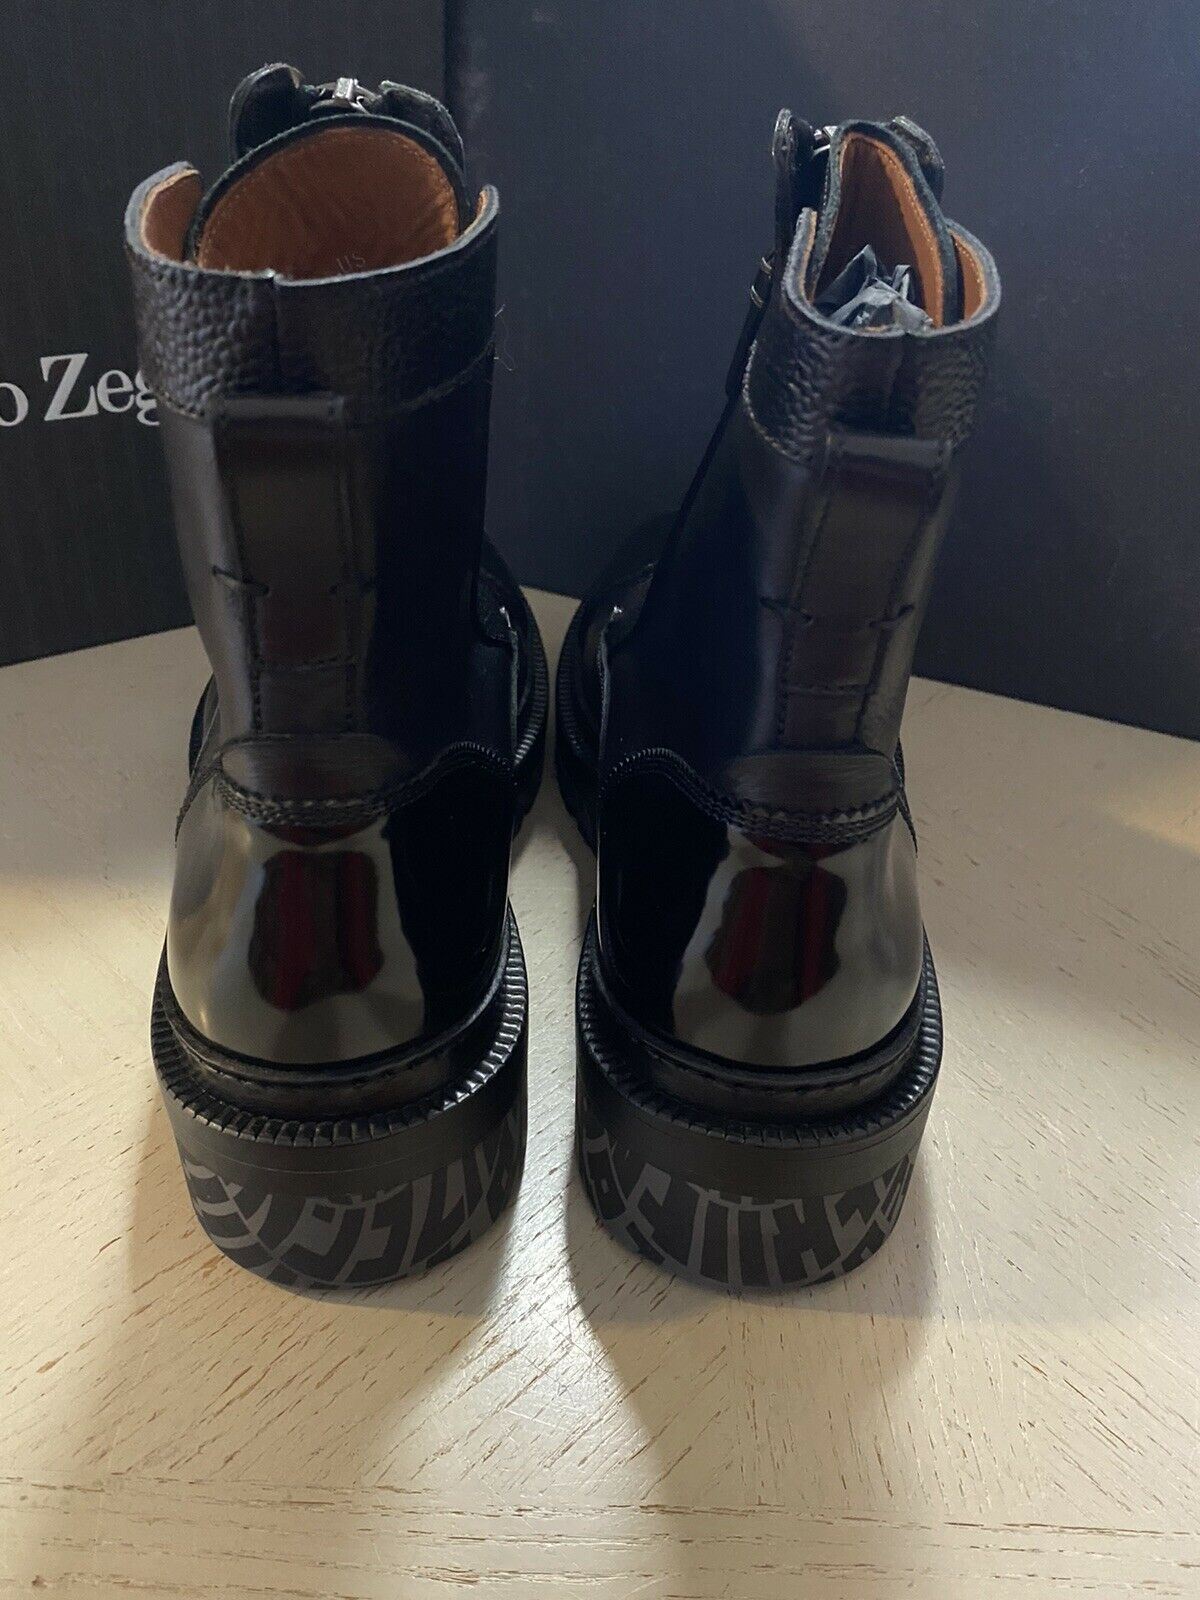 New $1595 Ermenegildo Zegna Couture Leather Light Boots Shoes Black 8.5 US Italy